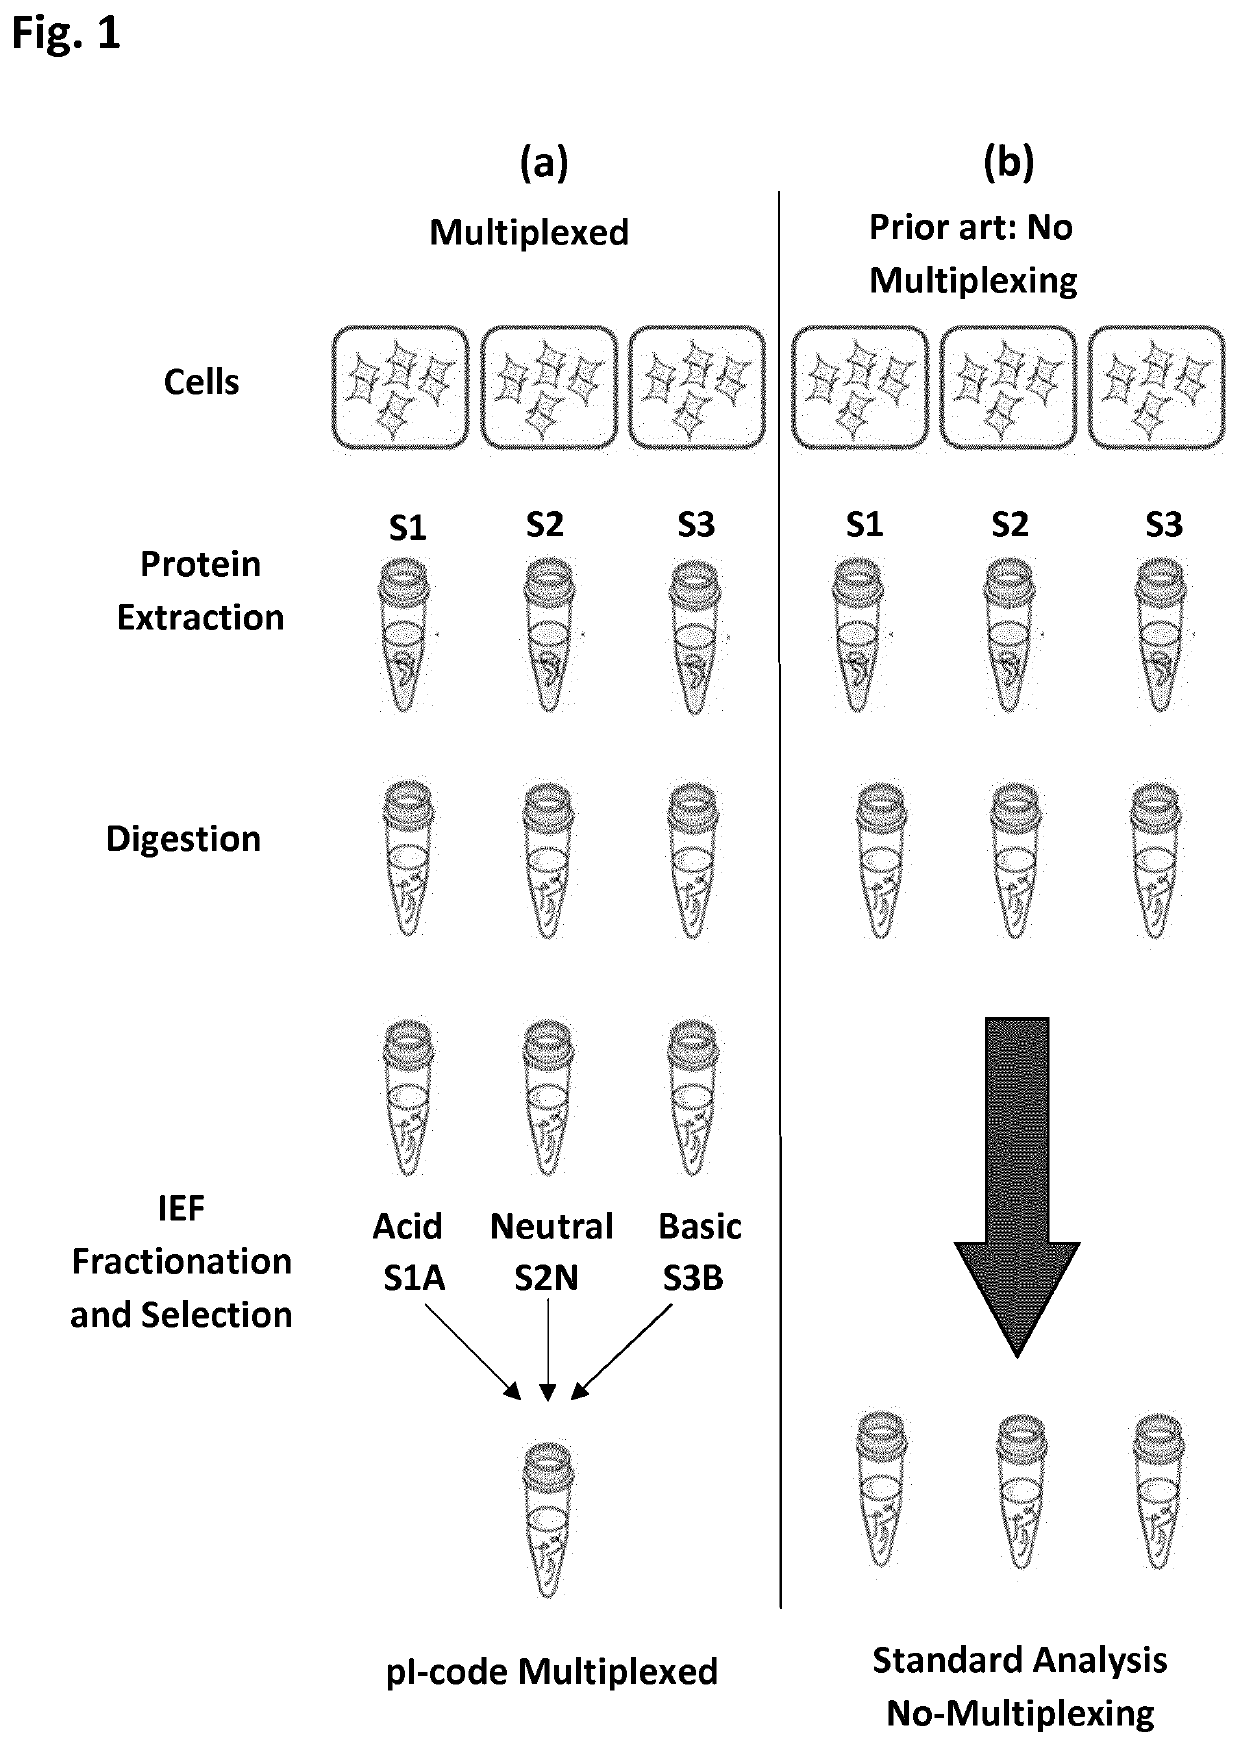 Apparatus and method for multiplexed protein quantification